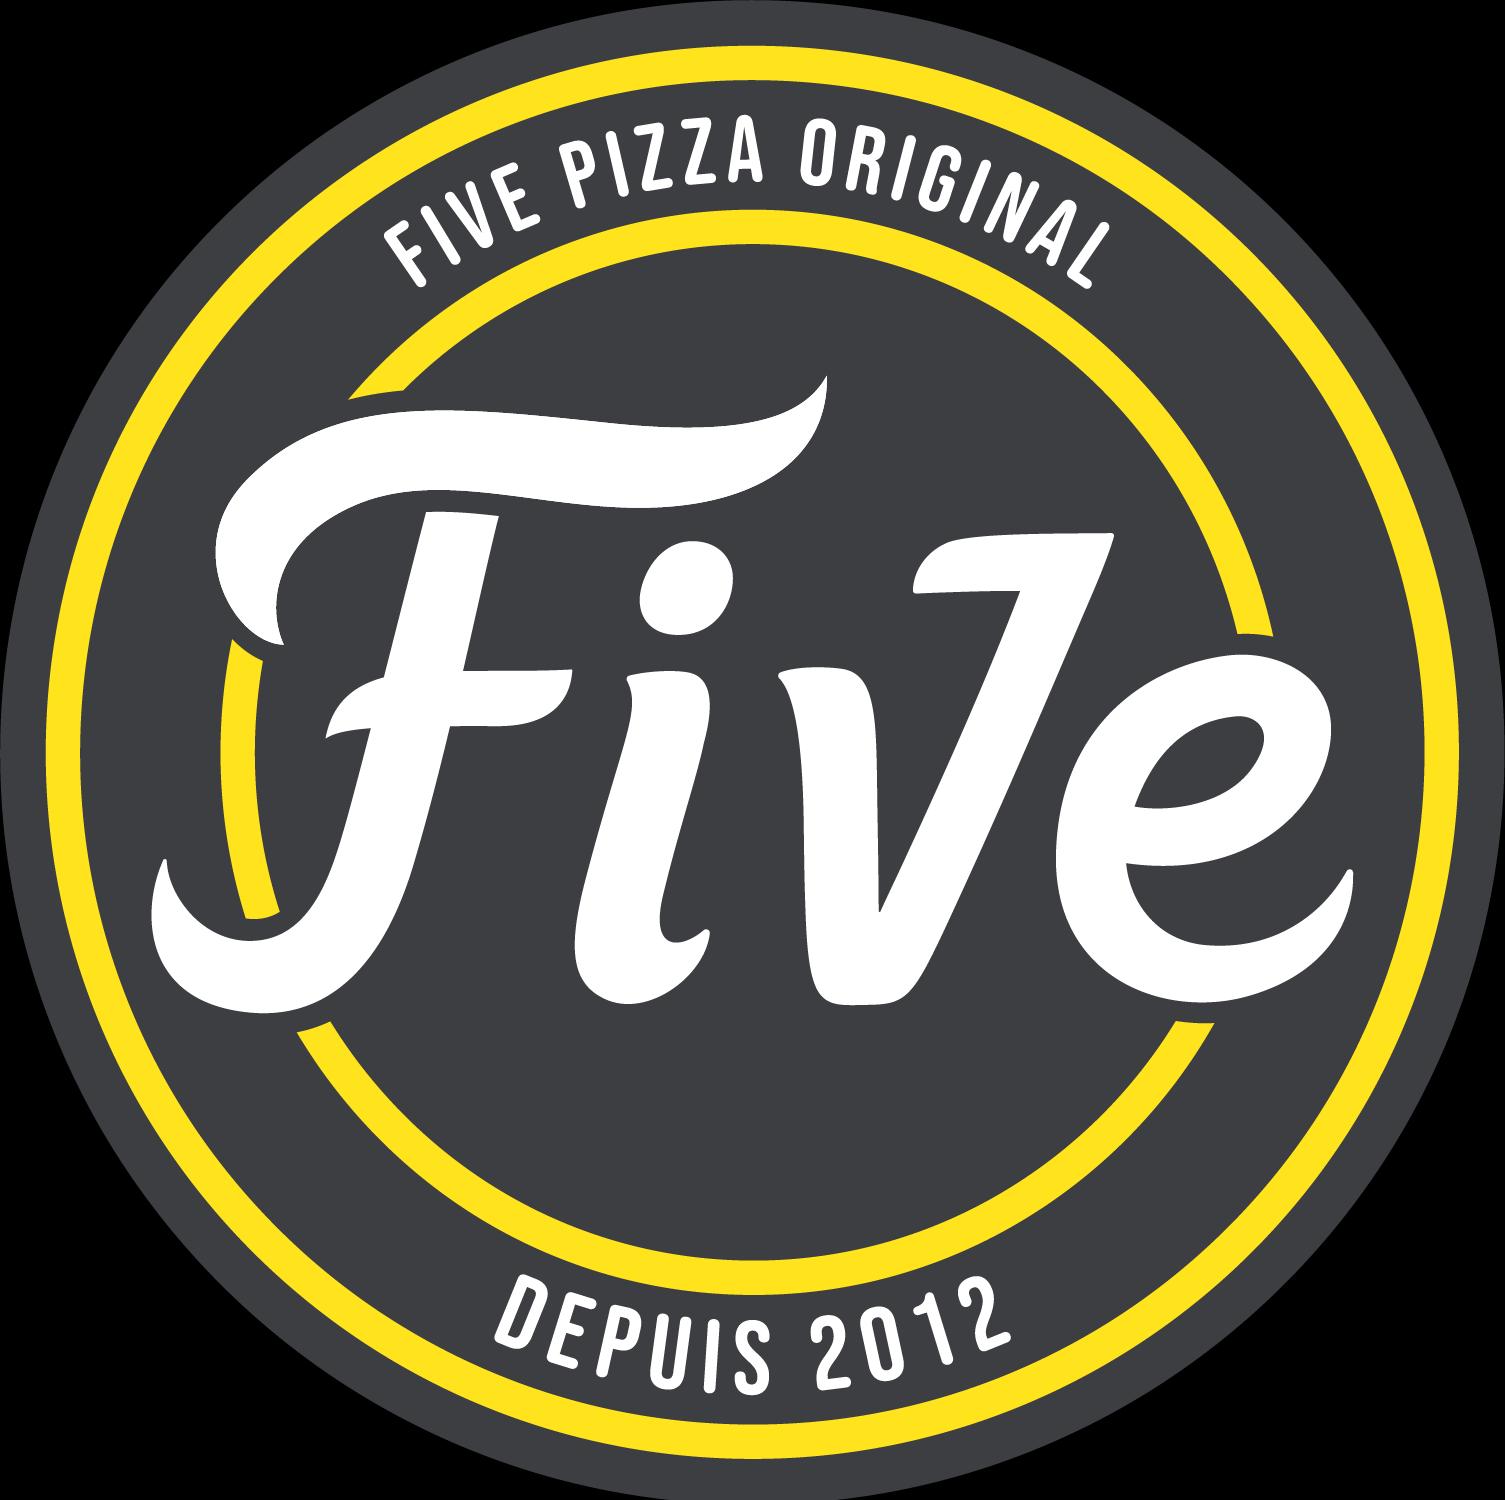 Five Pizza Original Choisy Le Roi